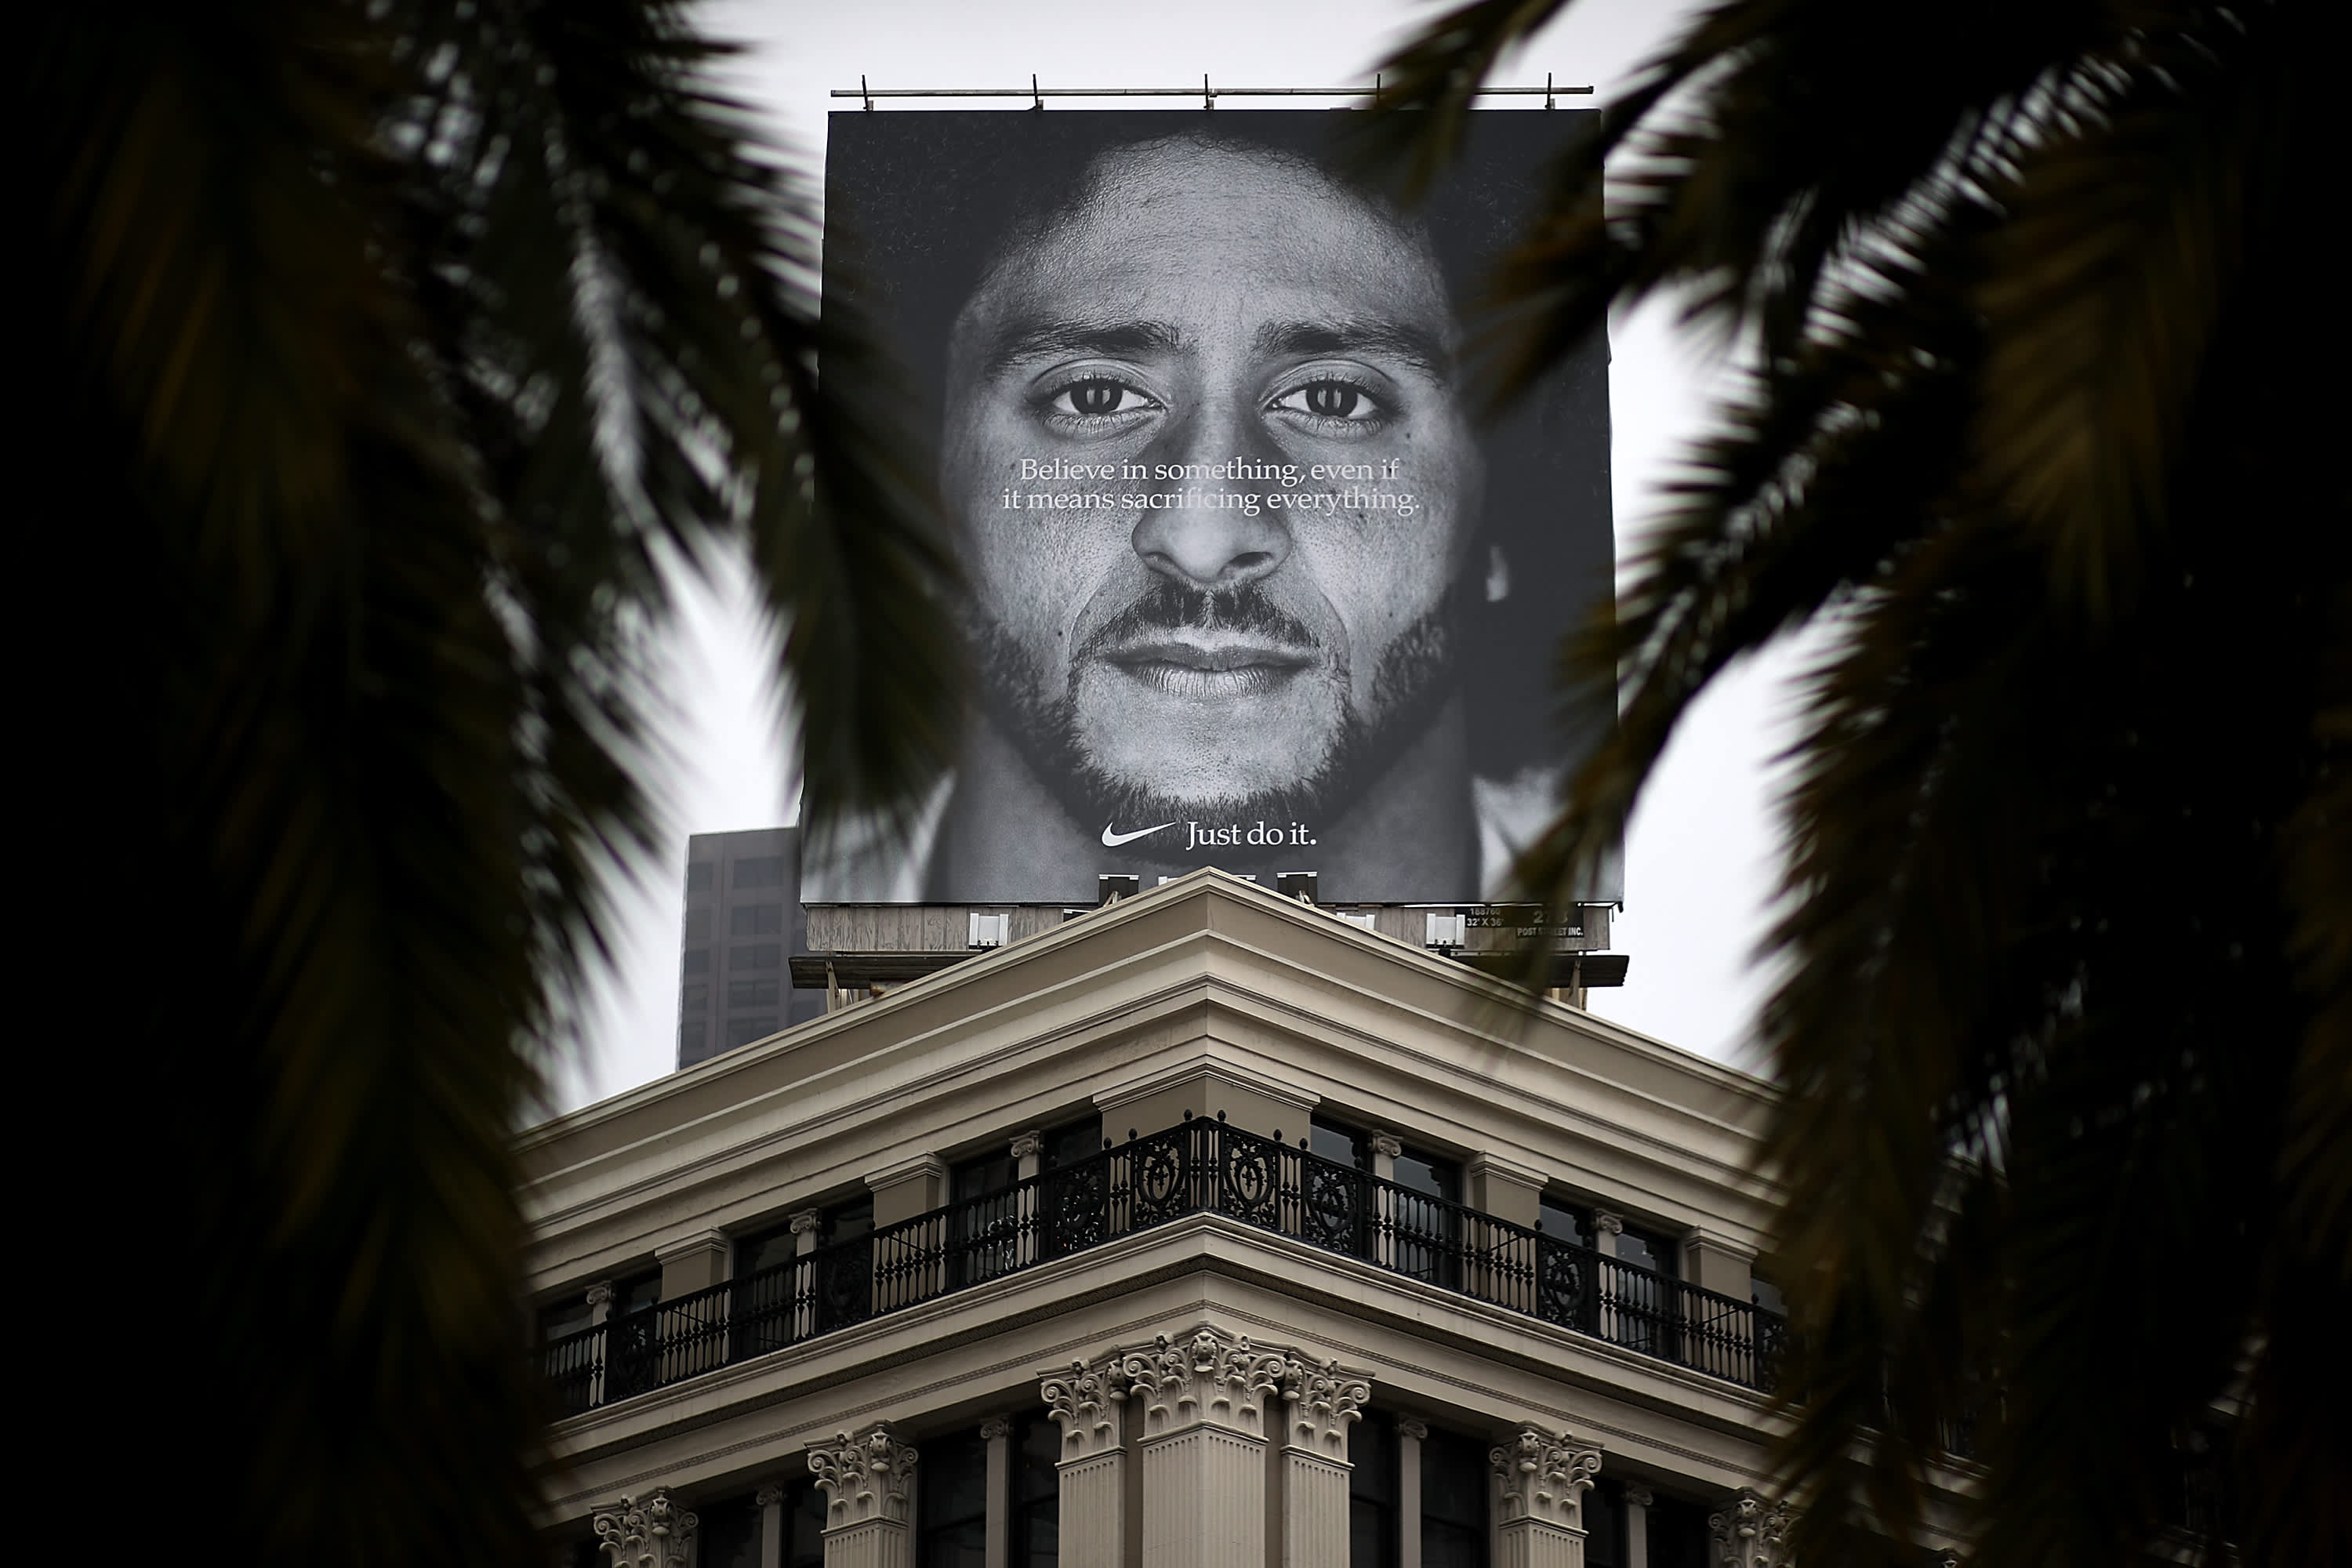 estanque Litoral El respeto Nike's Colin Kaepernick ad created $163.5 million in media exposure